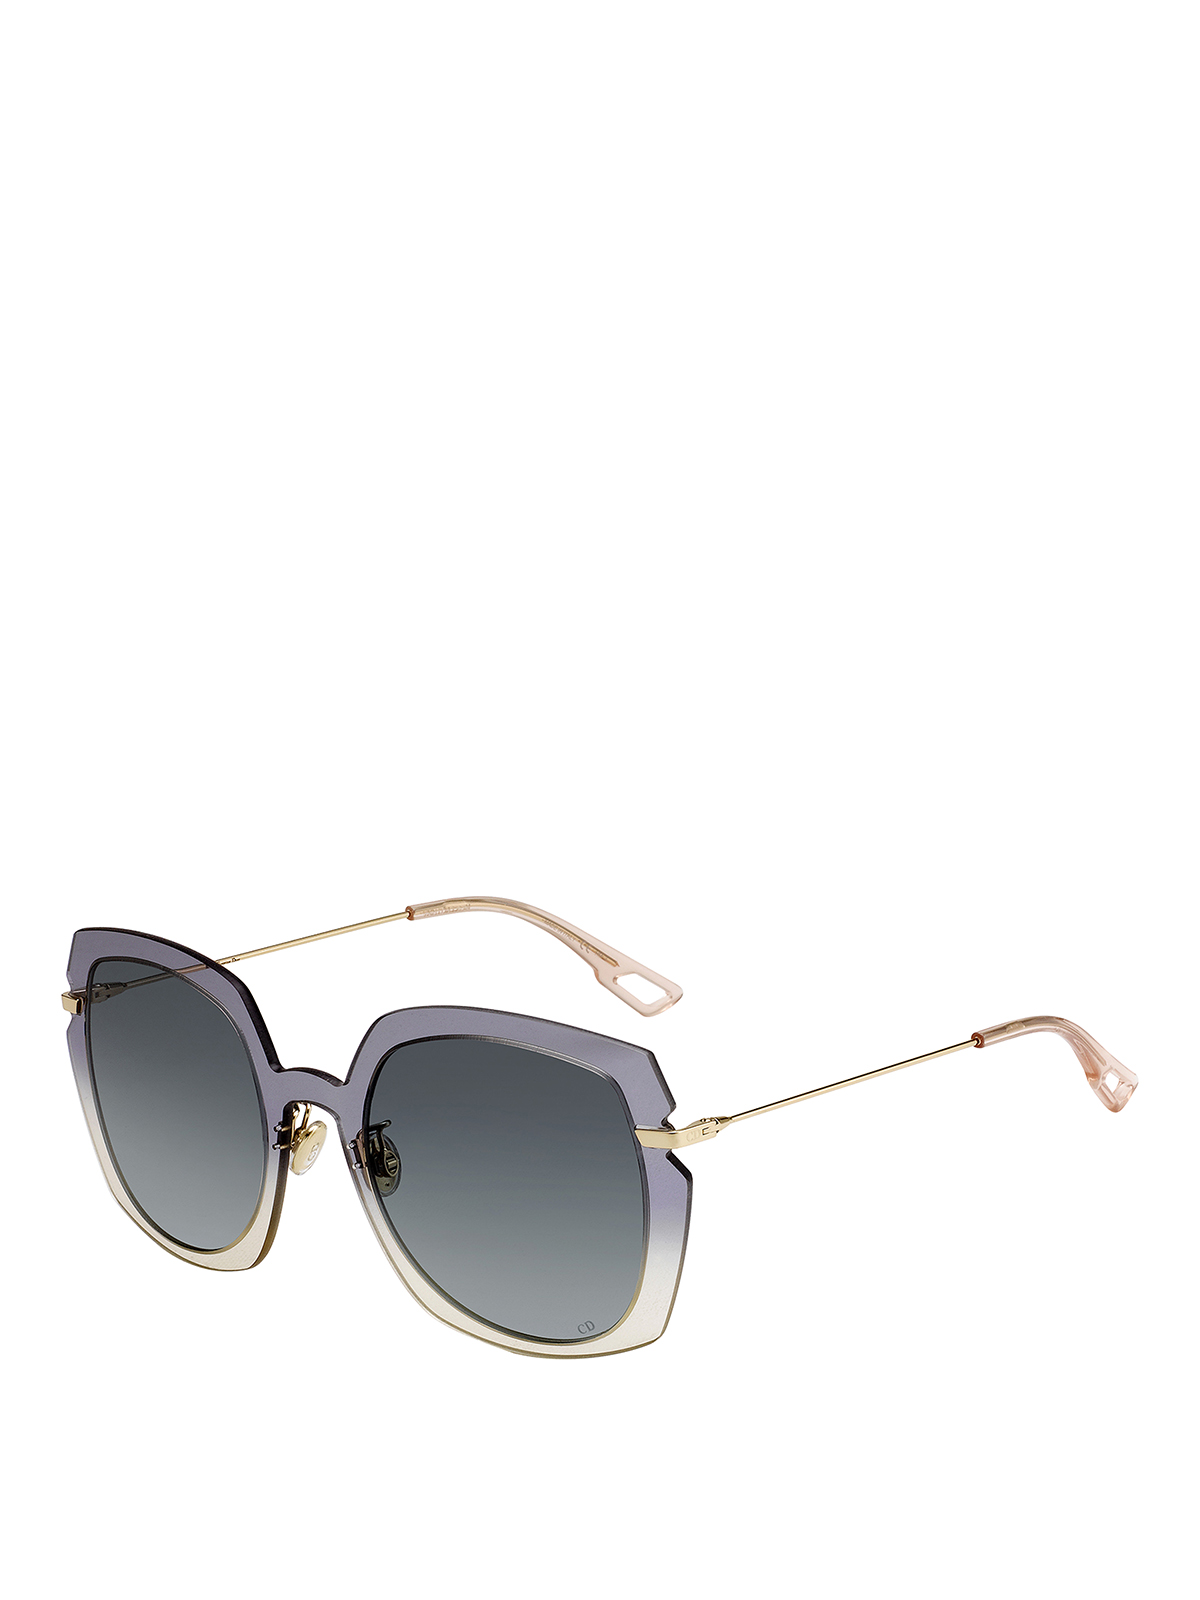 Blue Attitude1 sunglasses Dior  Vitkac TW